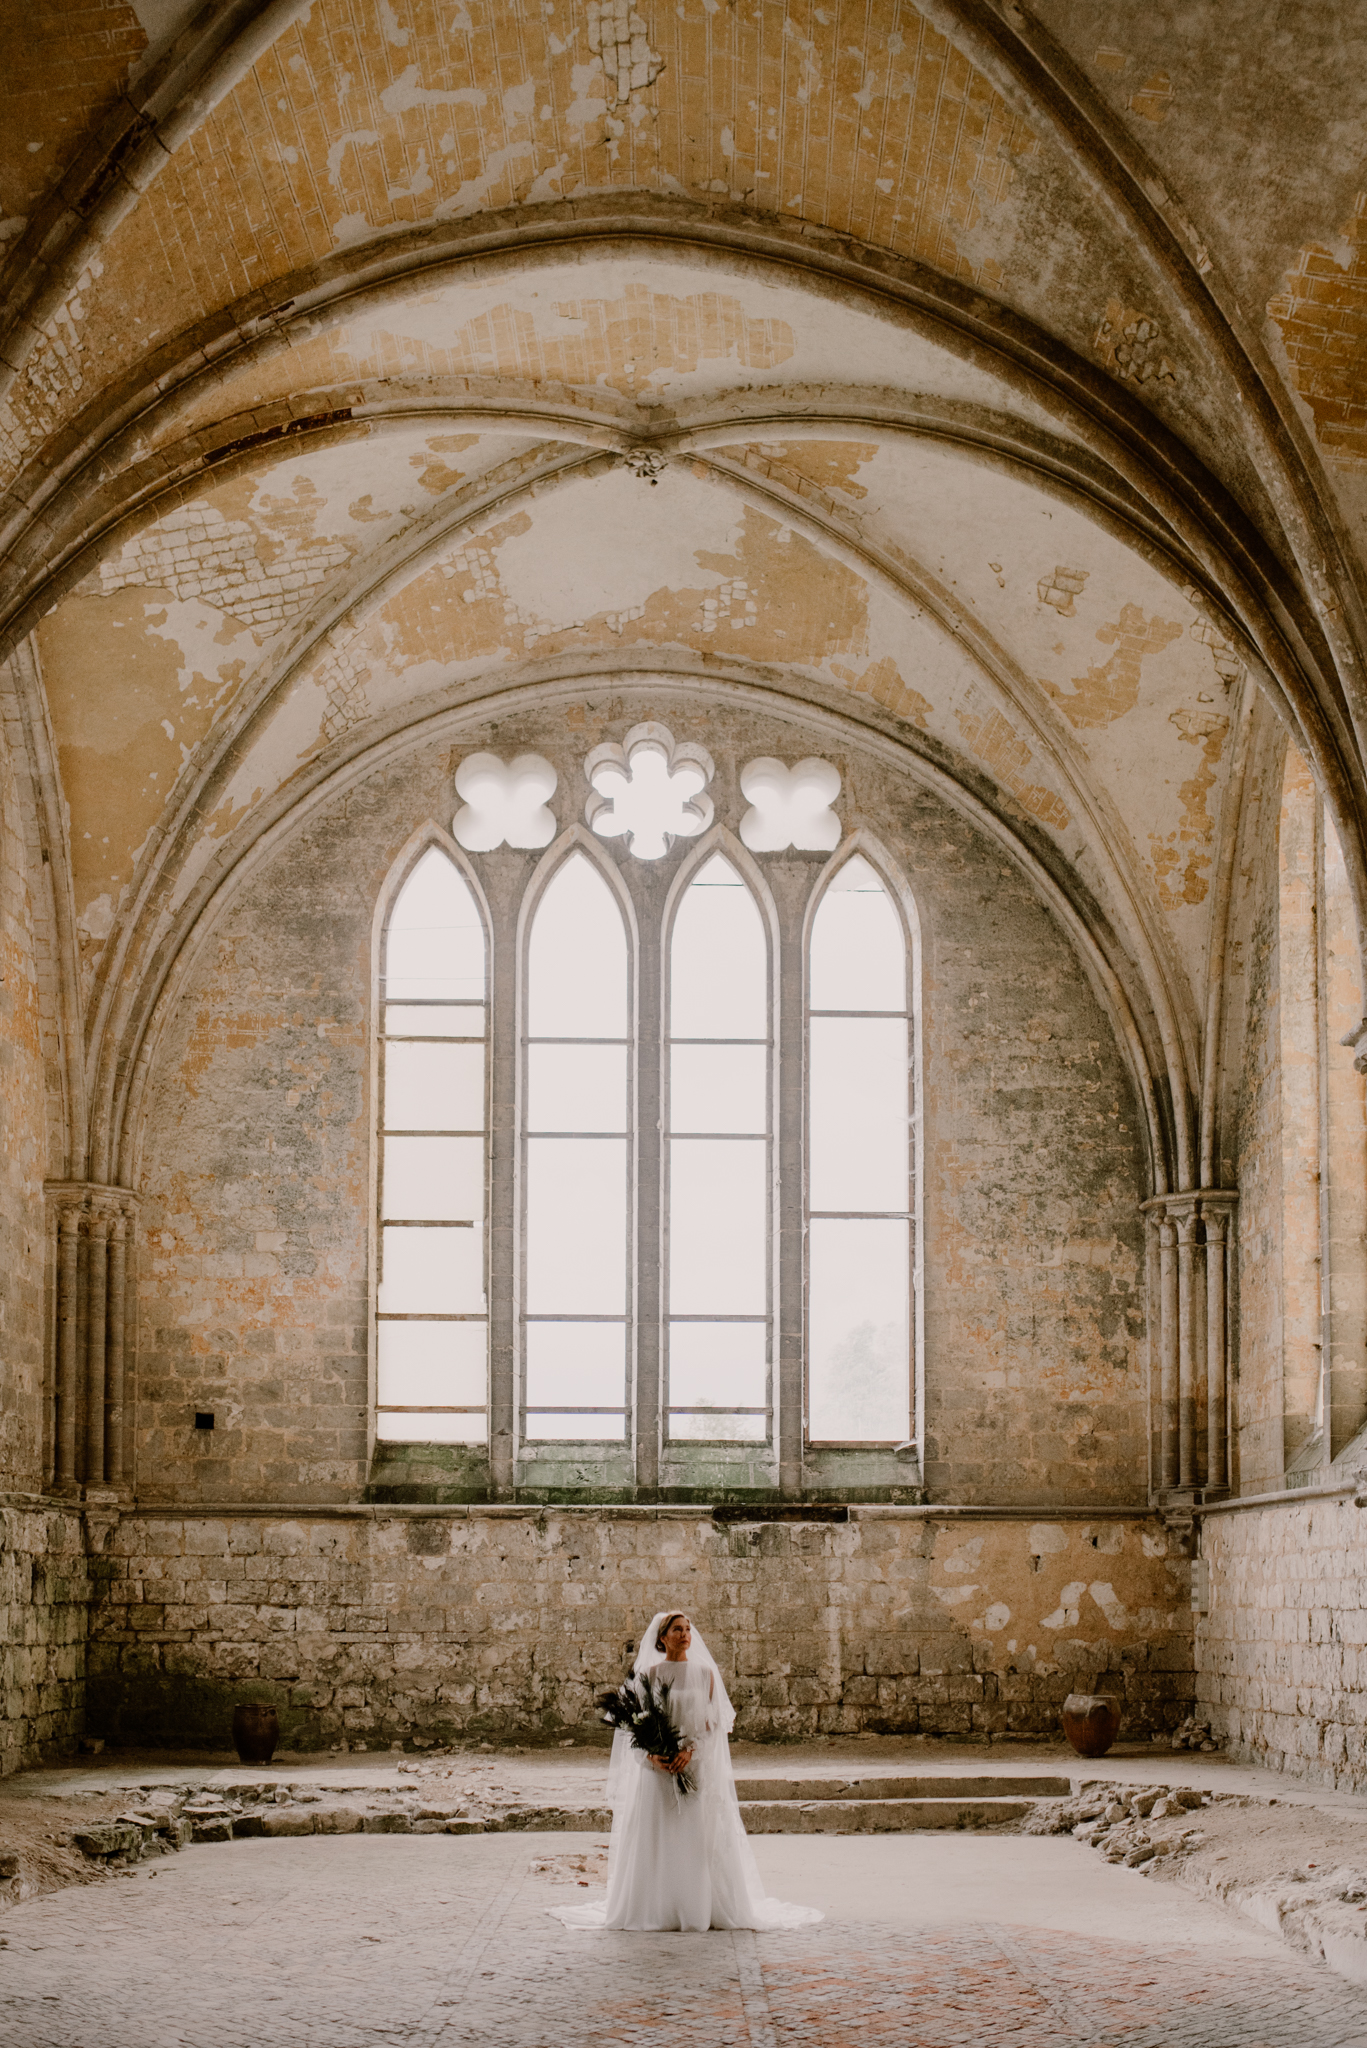 Mariage à l'Abbaye de Bonport - Marie + Geoffroy - Blog Mariage Madame C